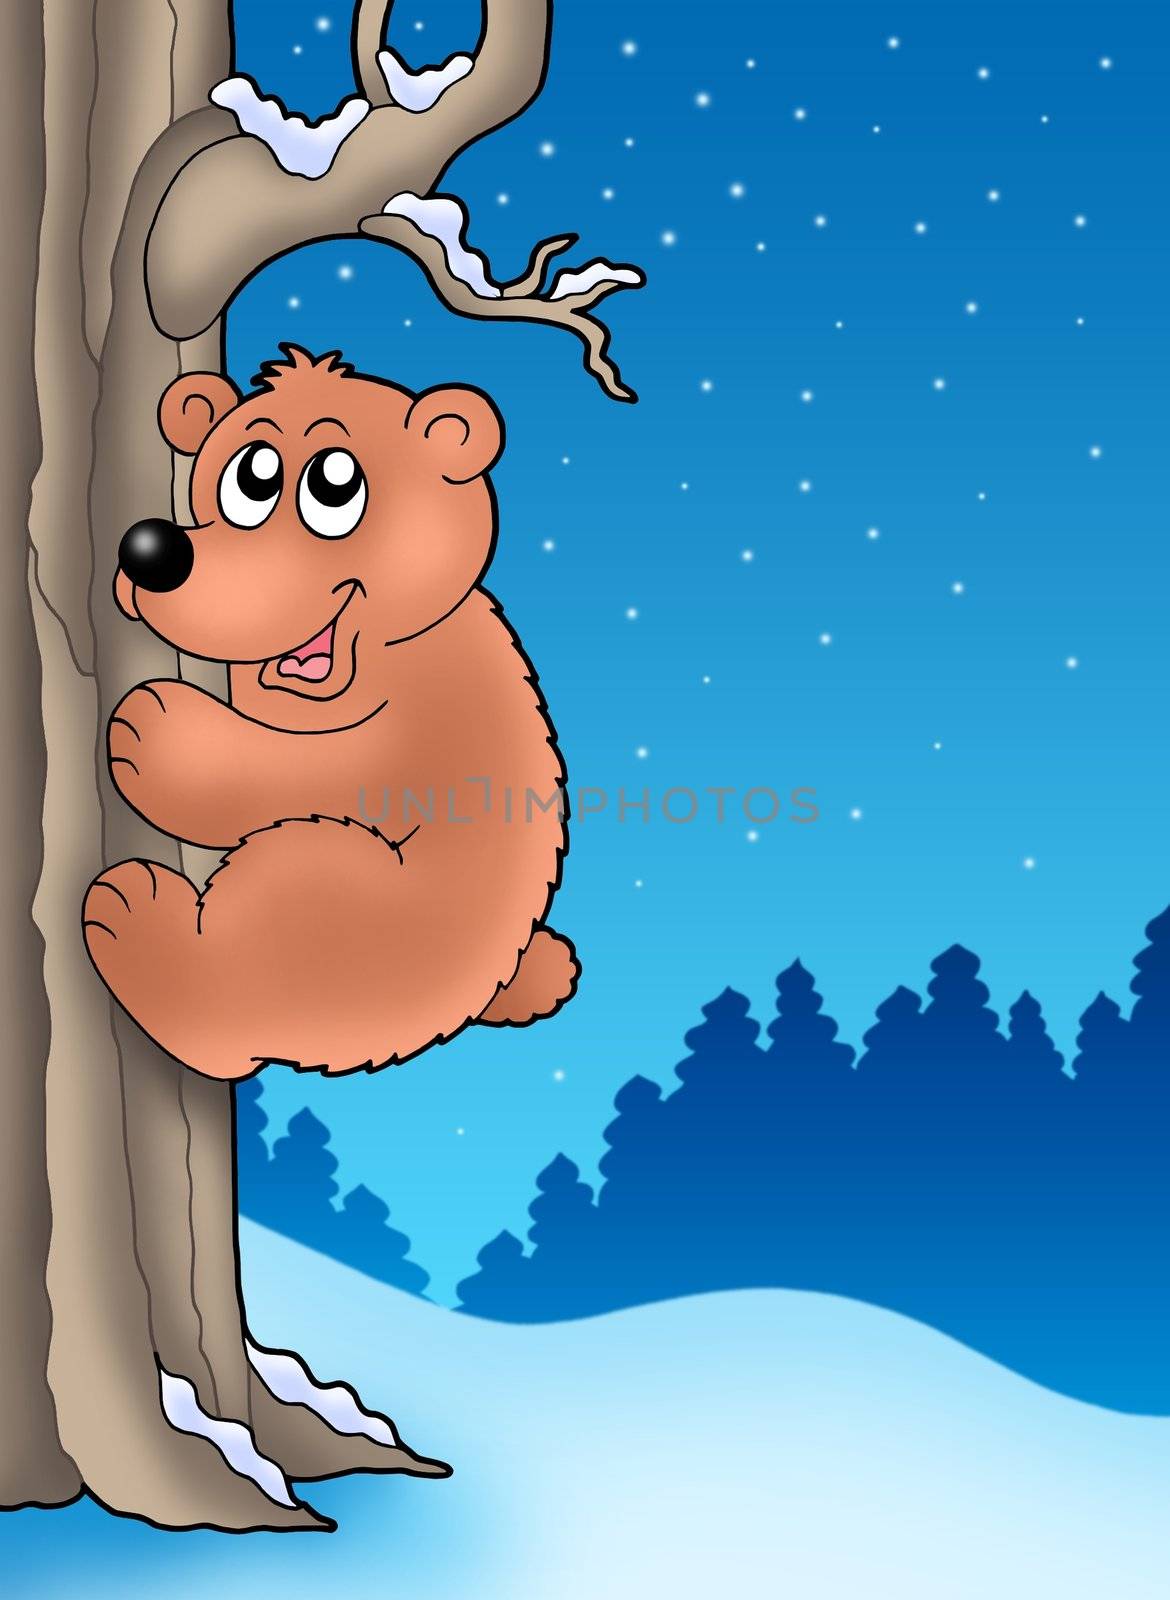 Cute bear climbing tree - color illustration.